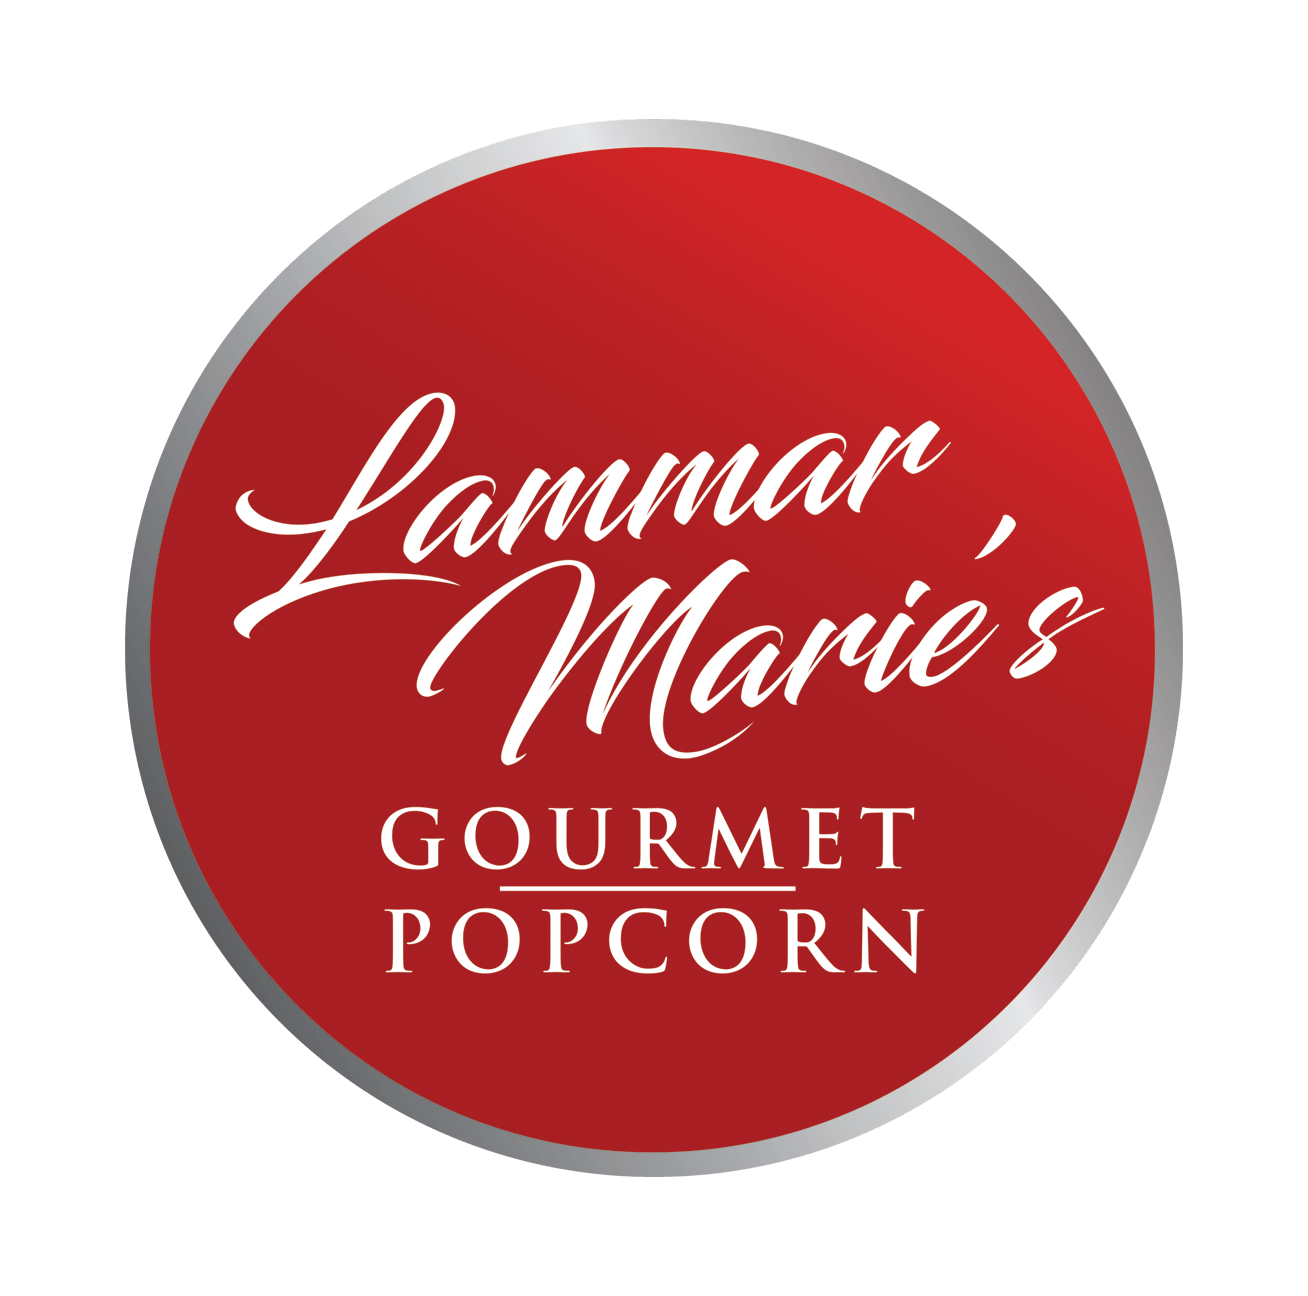 Lammar Marie's gourmet popcorn, thank you gift, free thank you gifts, popcorn thank you gifts